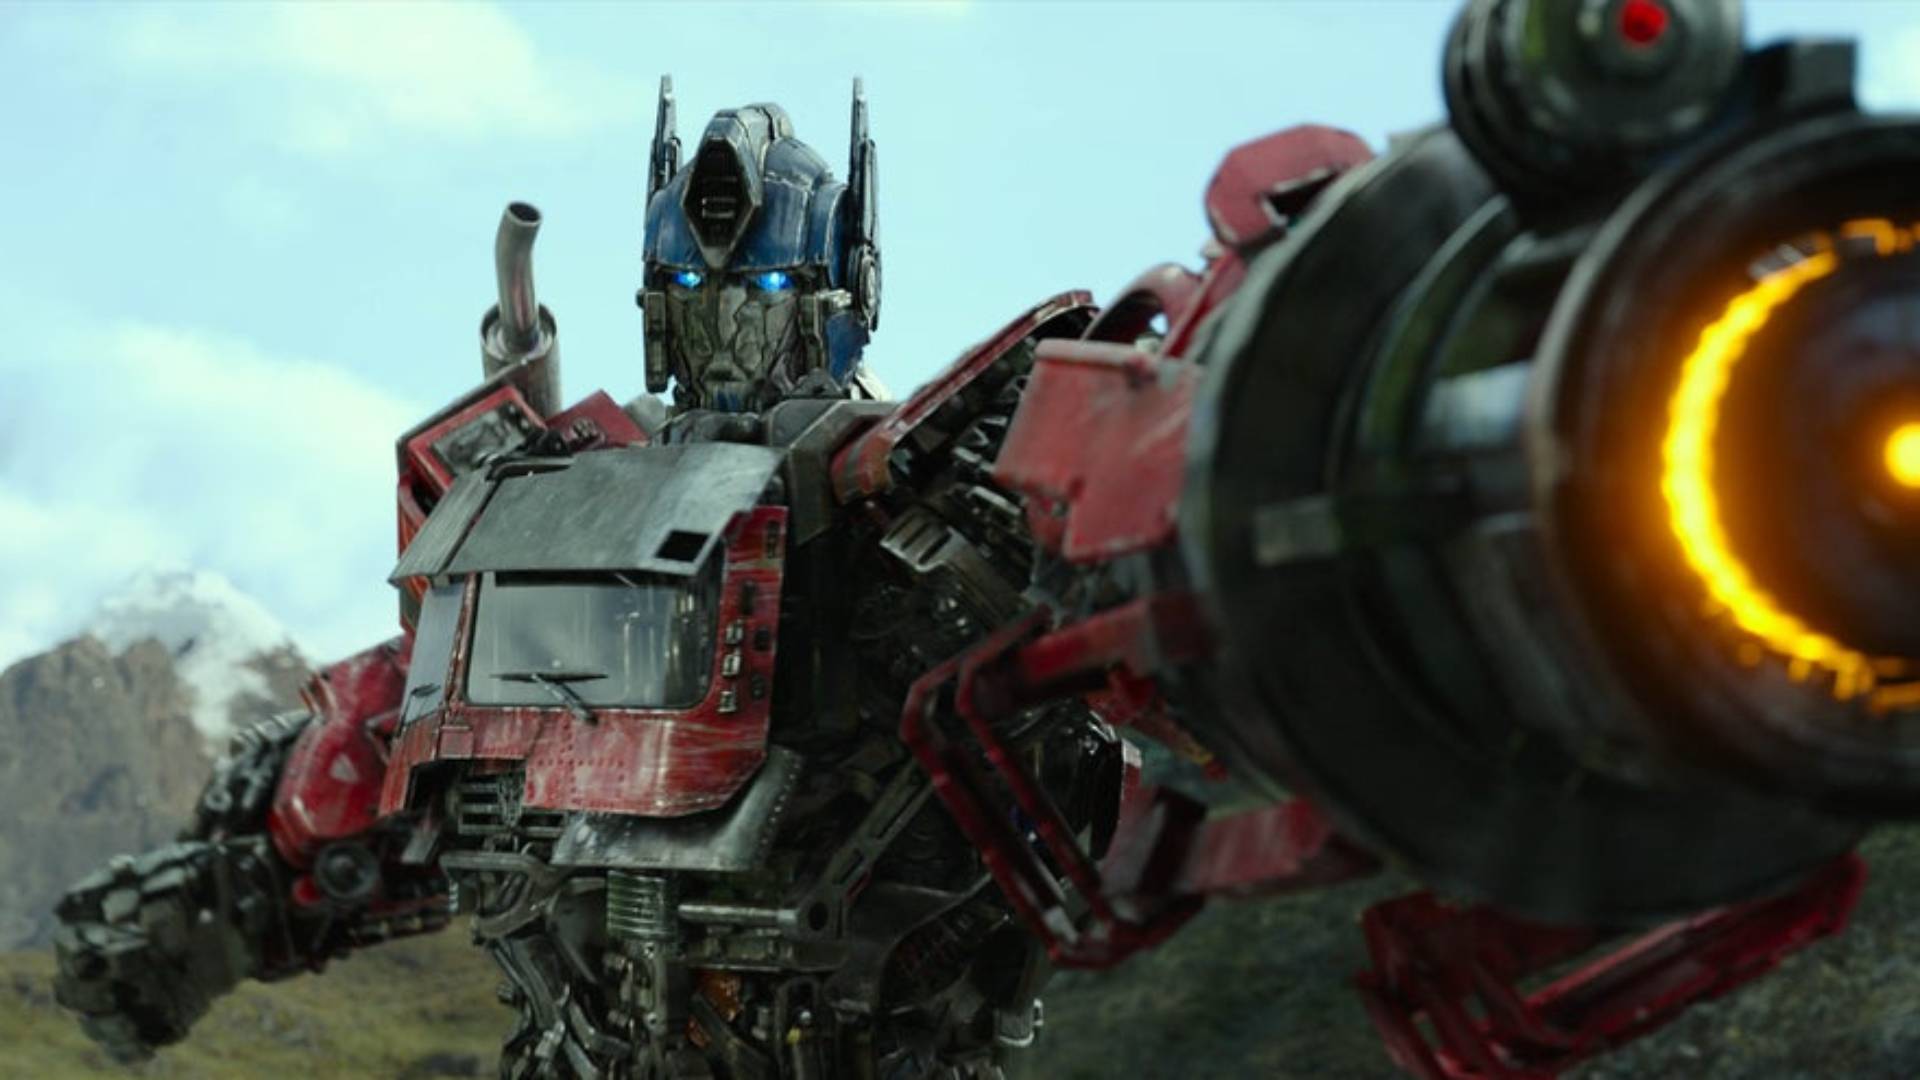 Voz de Optimus Prime chega ao TikTok